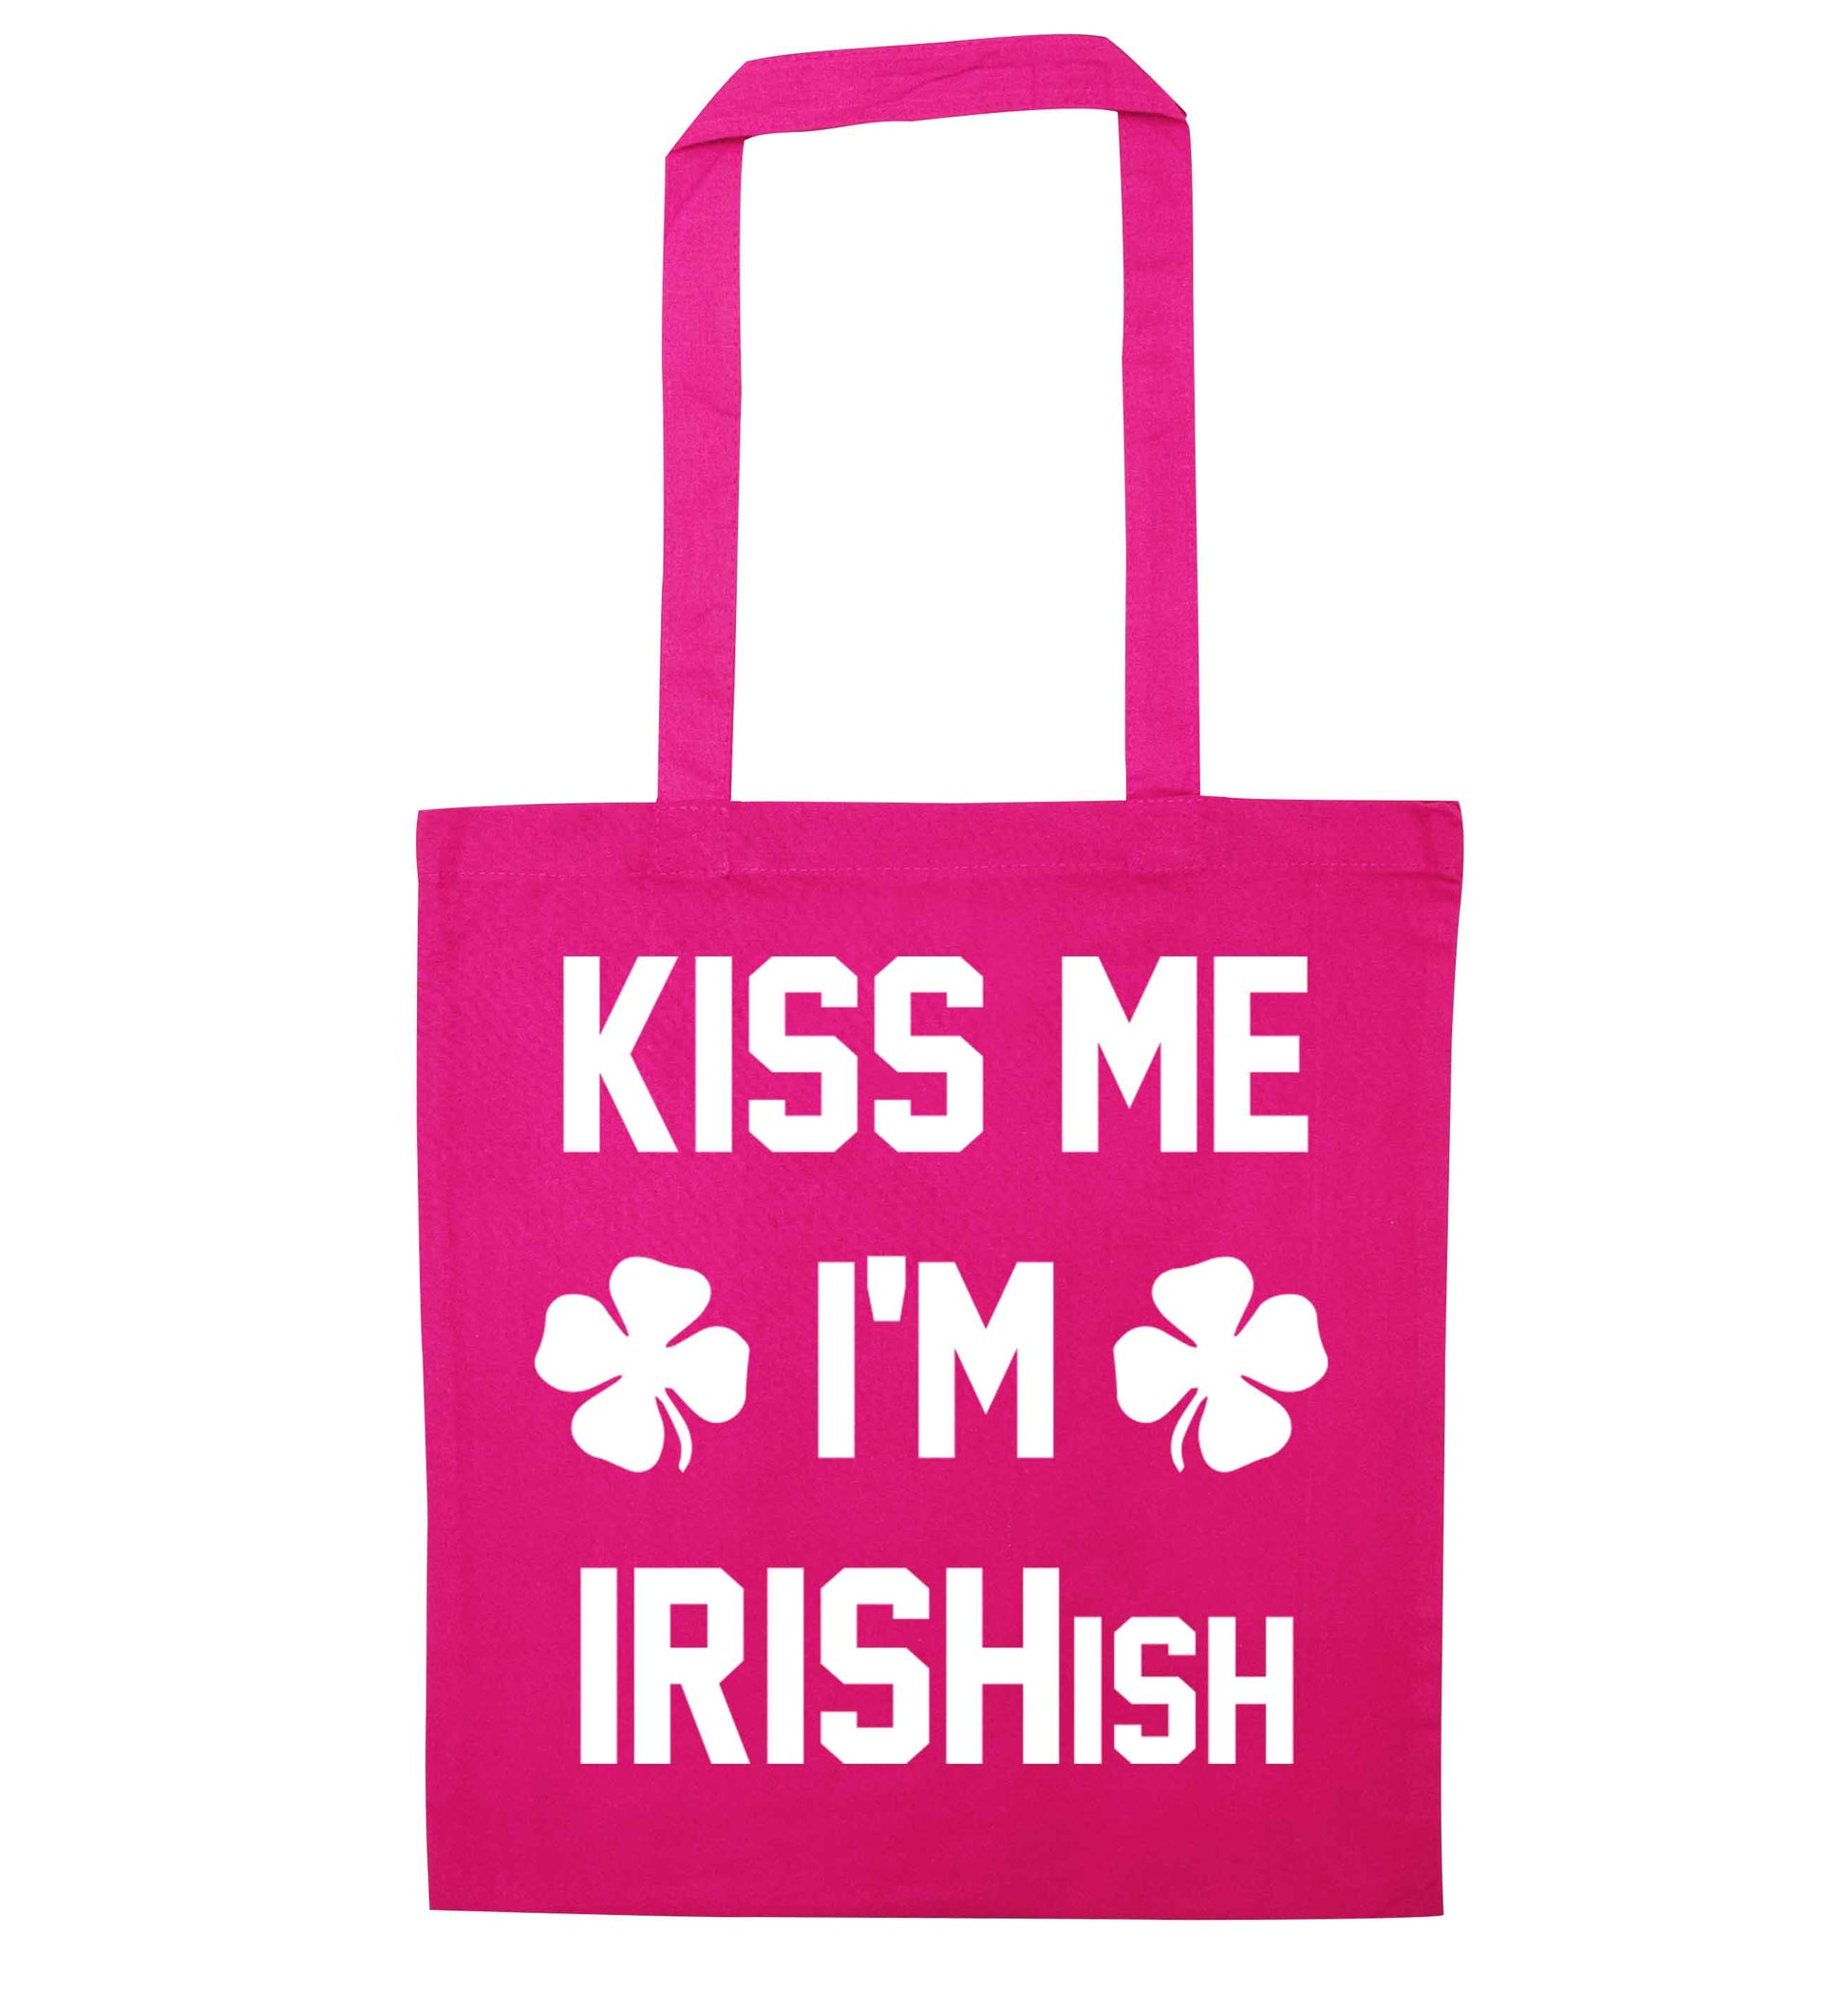 Kiss me I'm Irishish pink tote bag